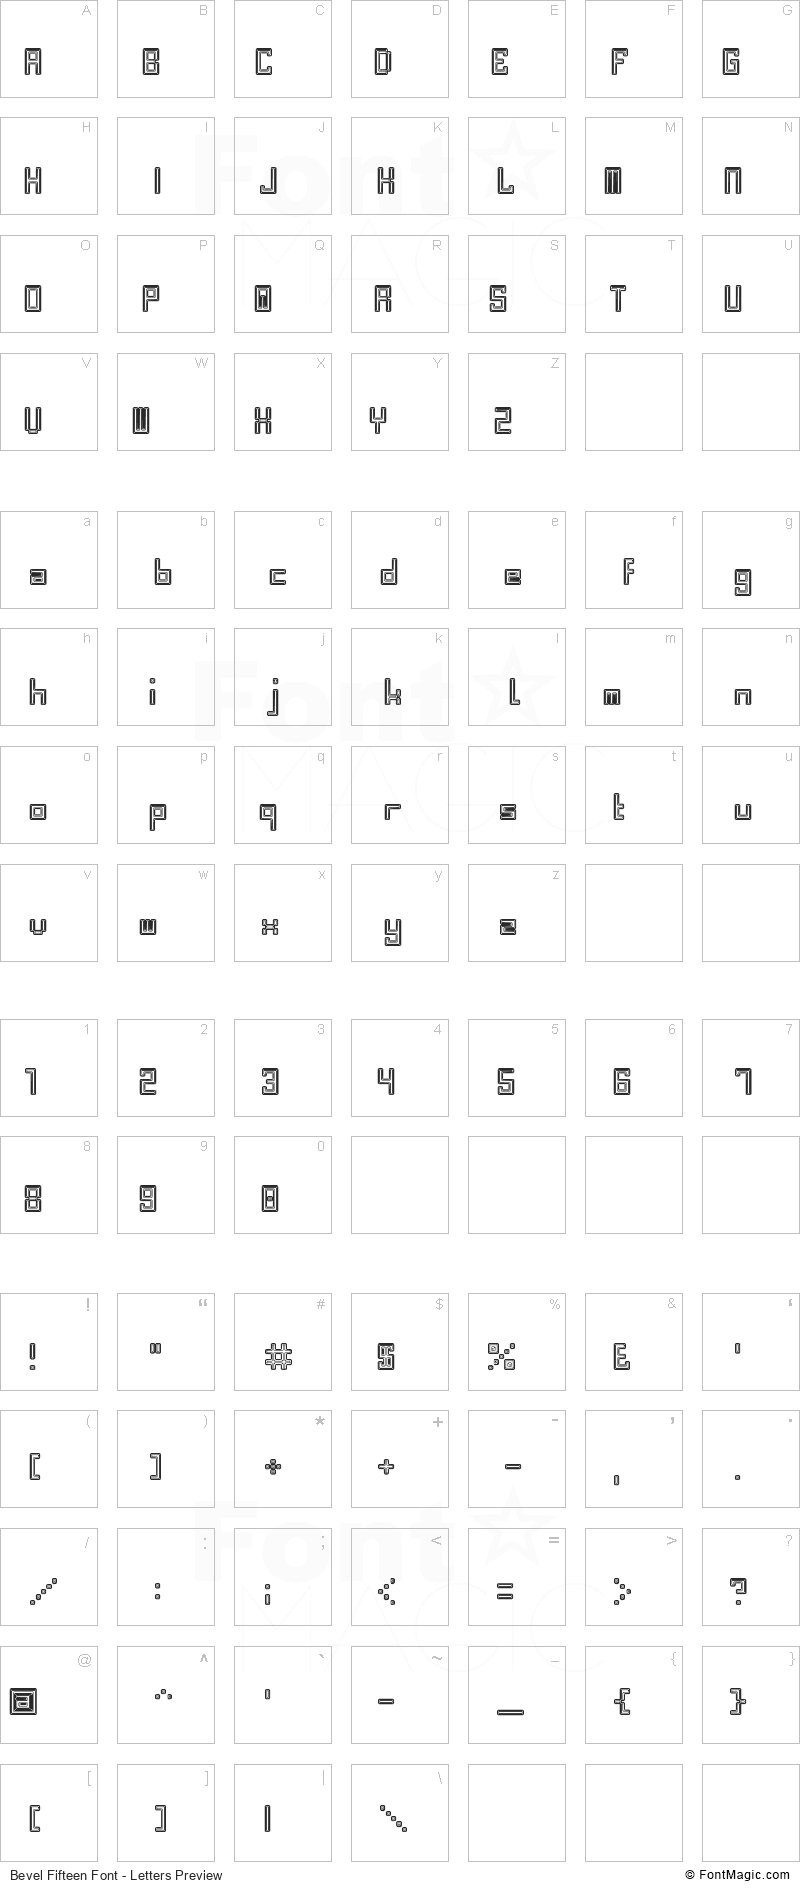 Bevel Fifteen Font - All Latters Preview Chart